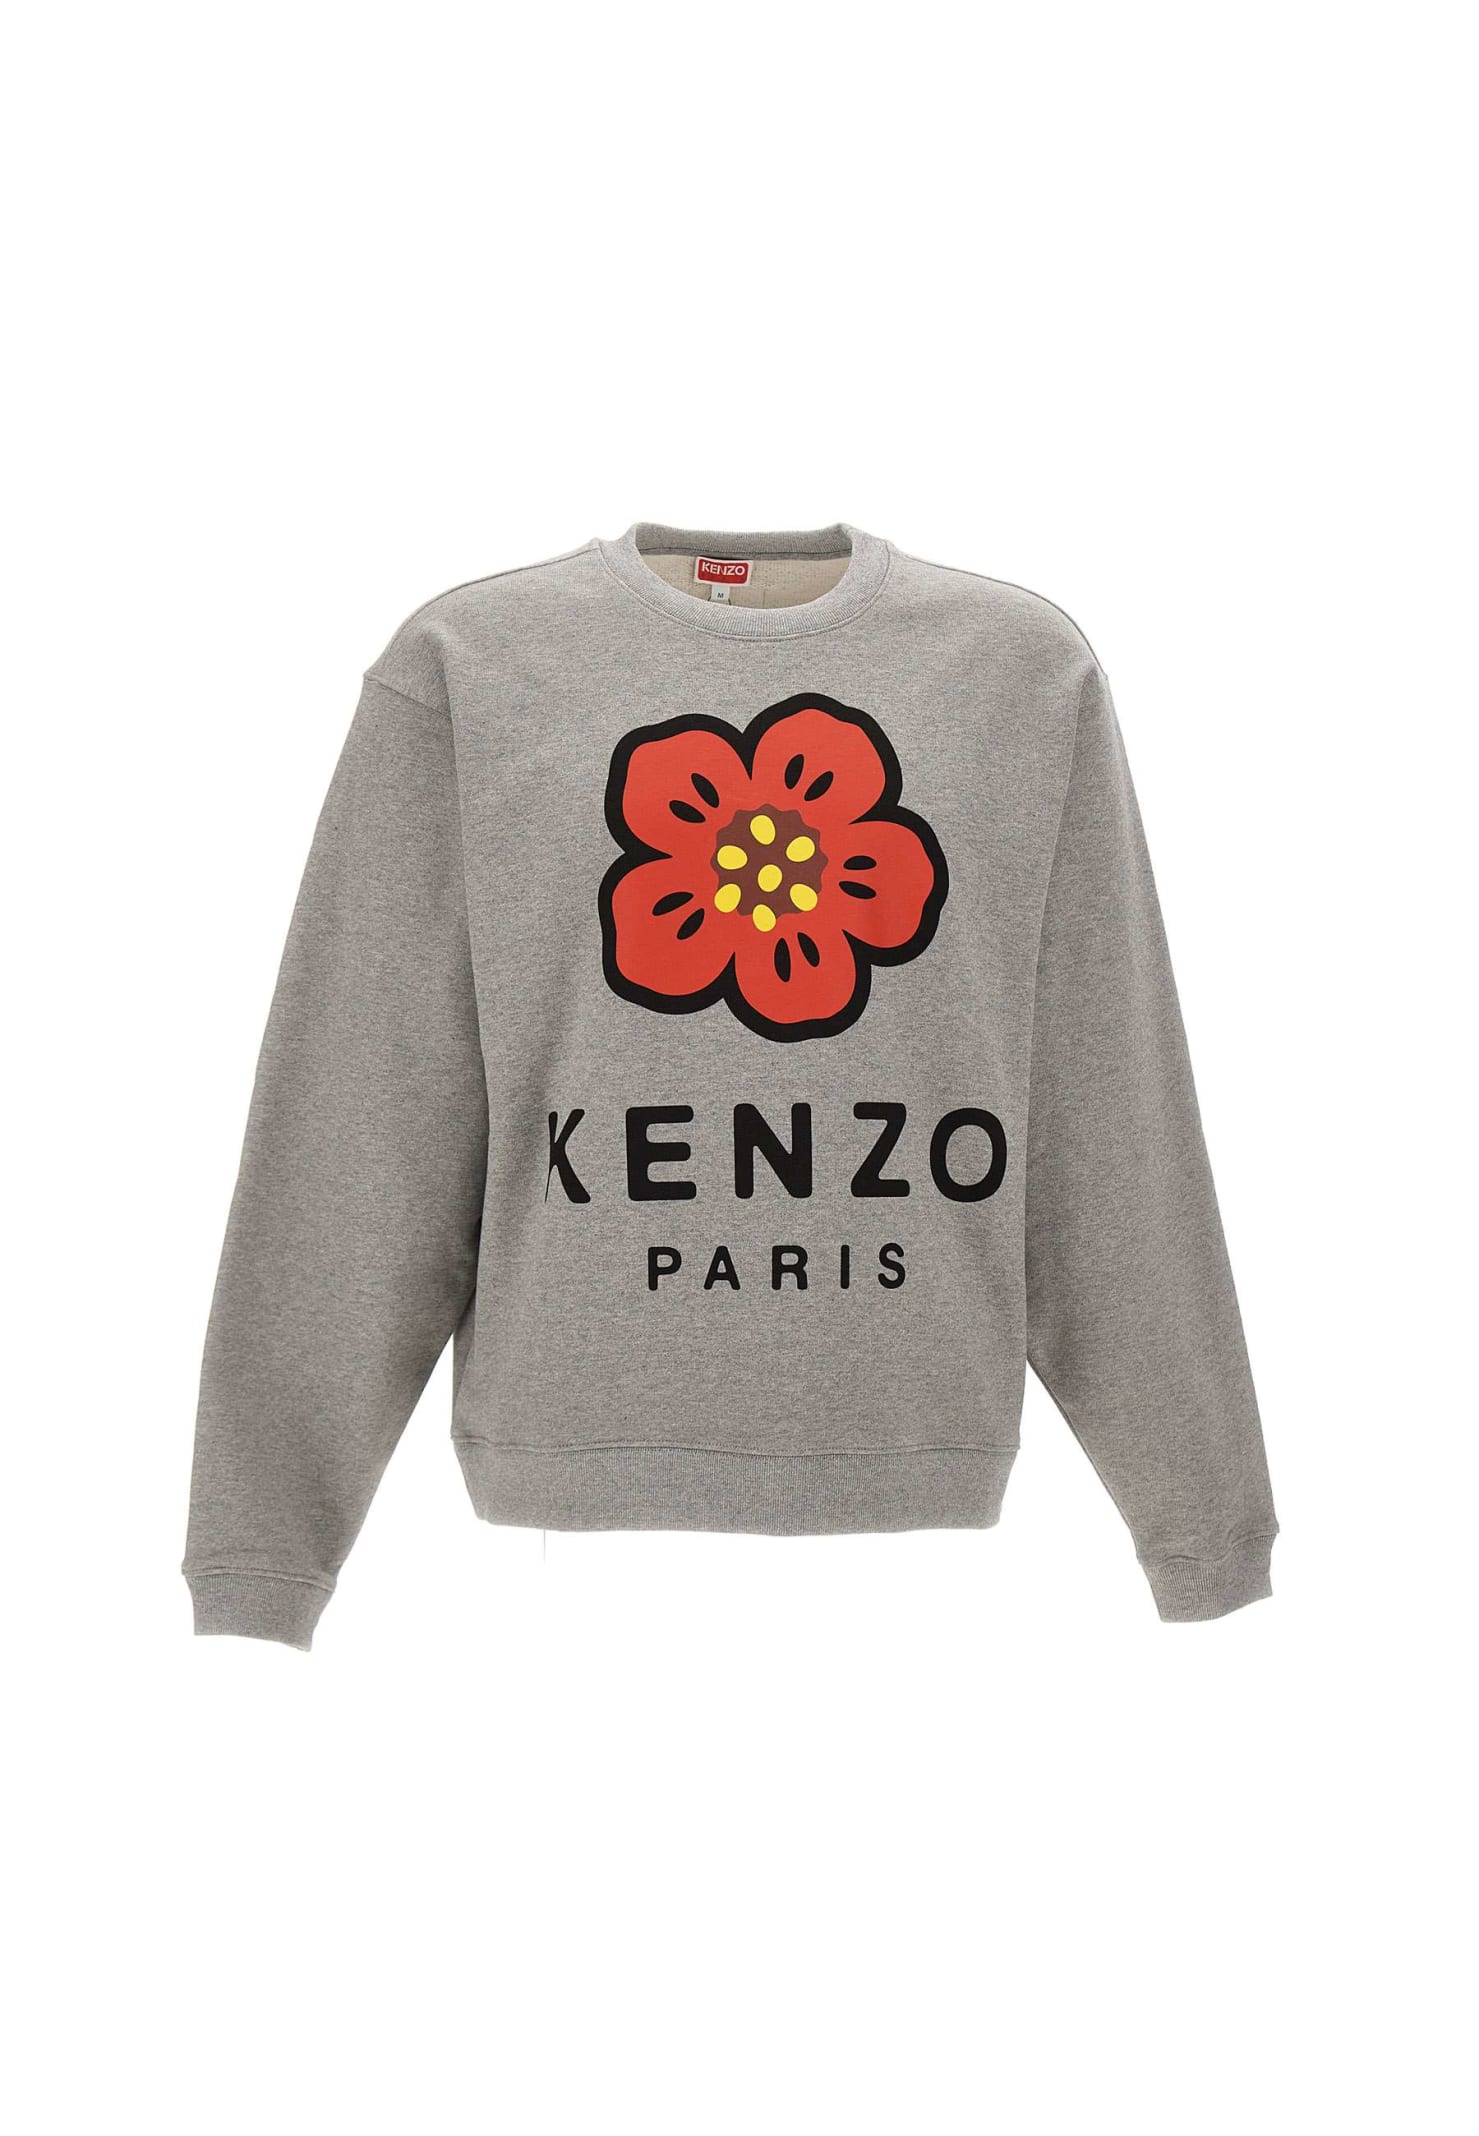 Kenzo Paris Cotton Sweatshirt seasonal Logo Classic